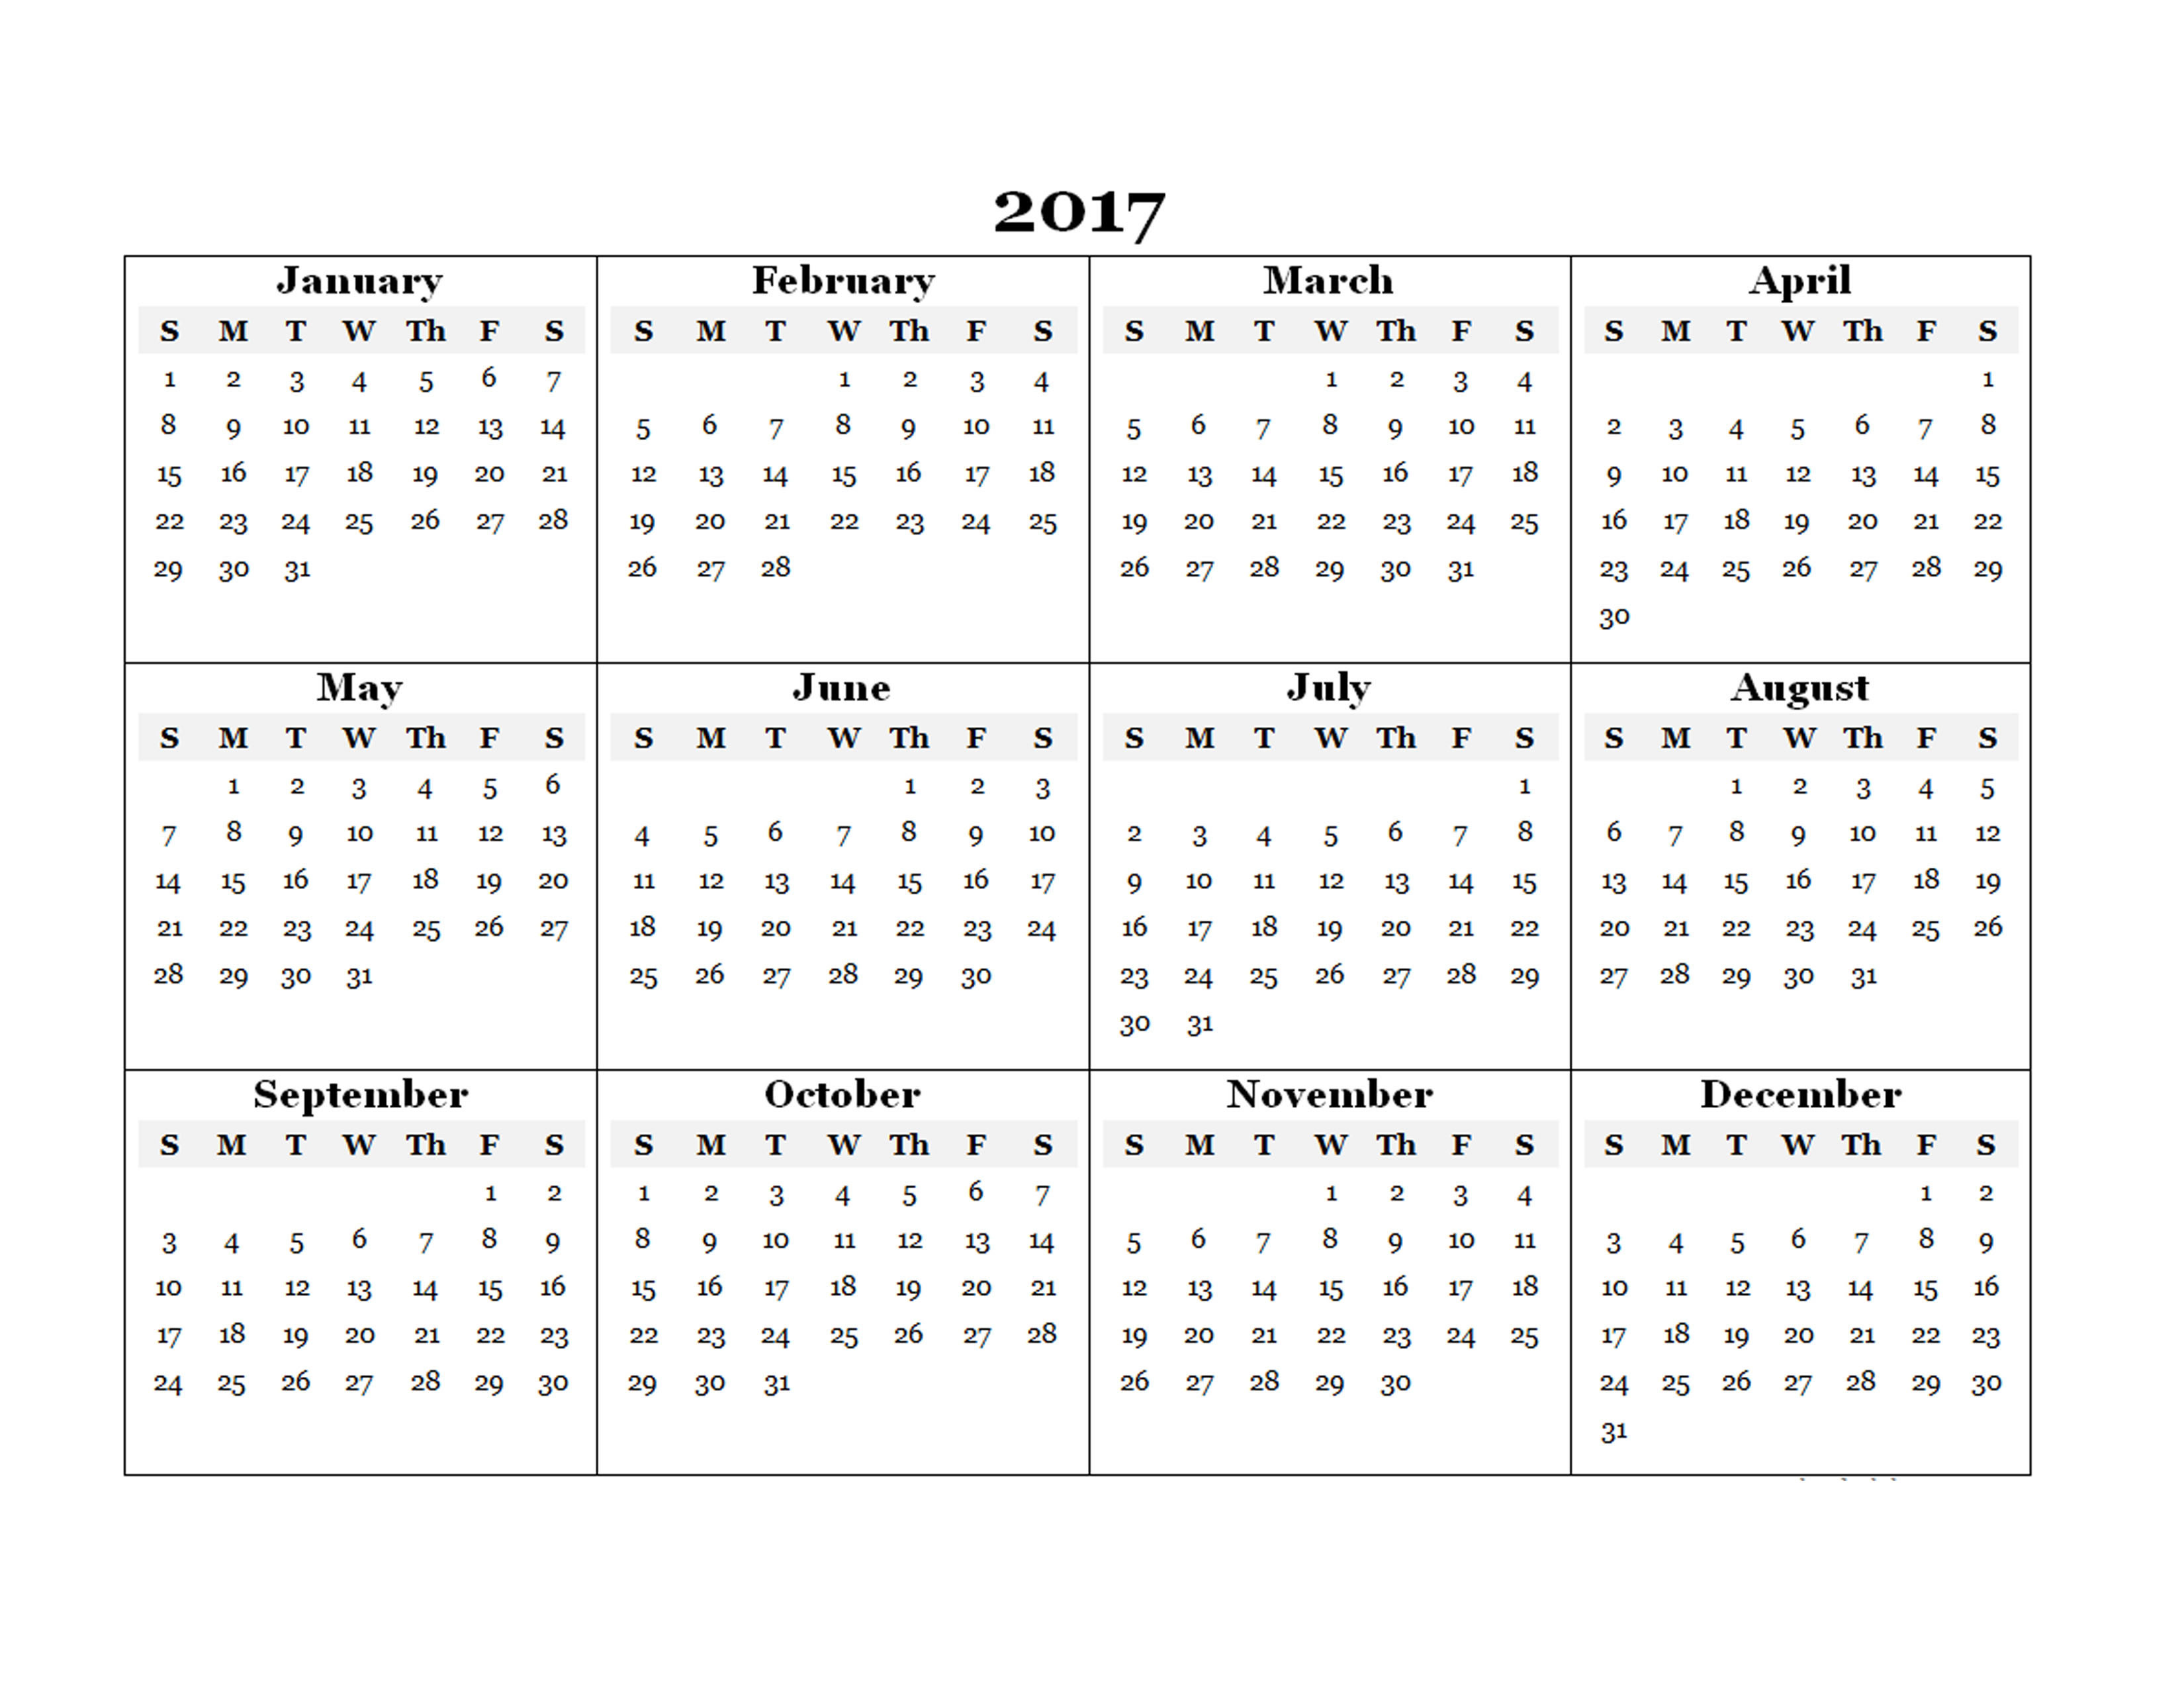 free-printable-2017-calendar